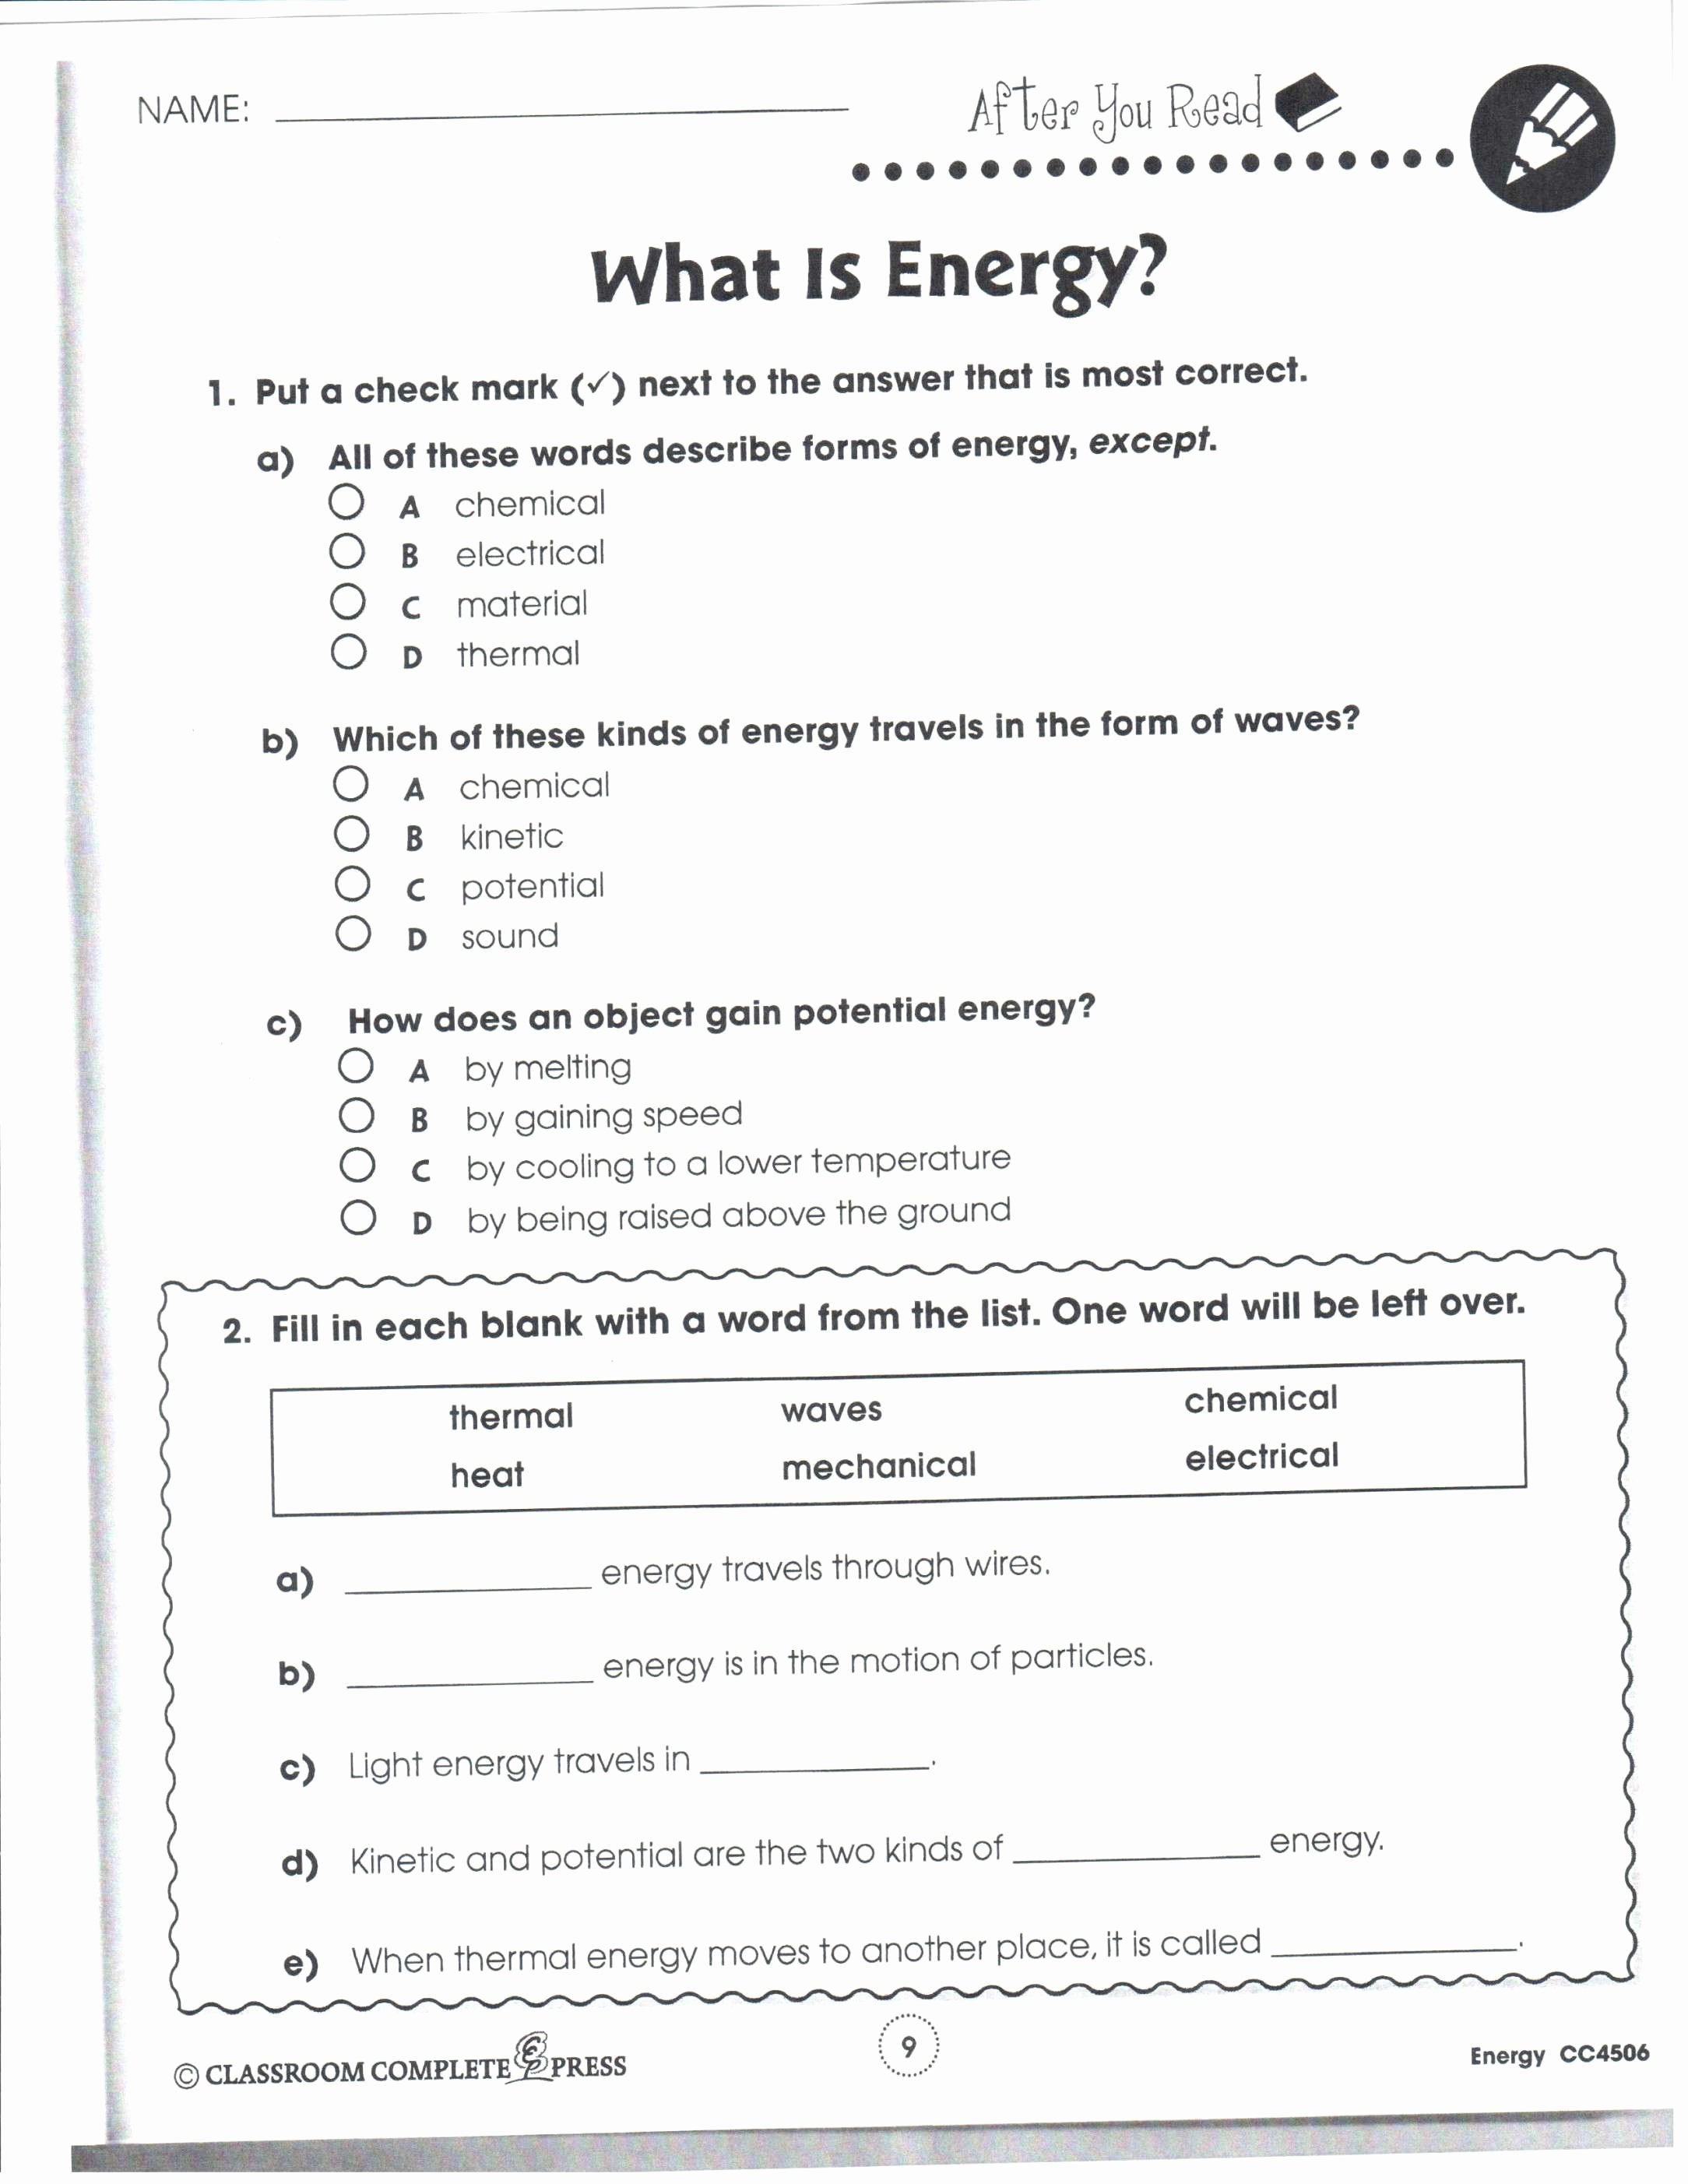 Work Power Energy Worksheet Luxury Work Energy and Power Worksheet Answers Physics Classroom